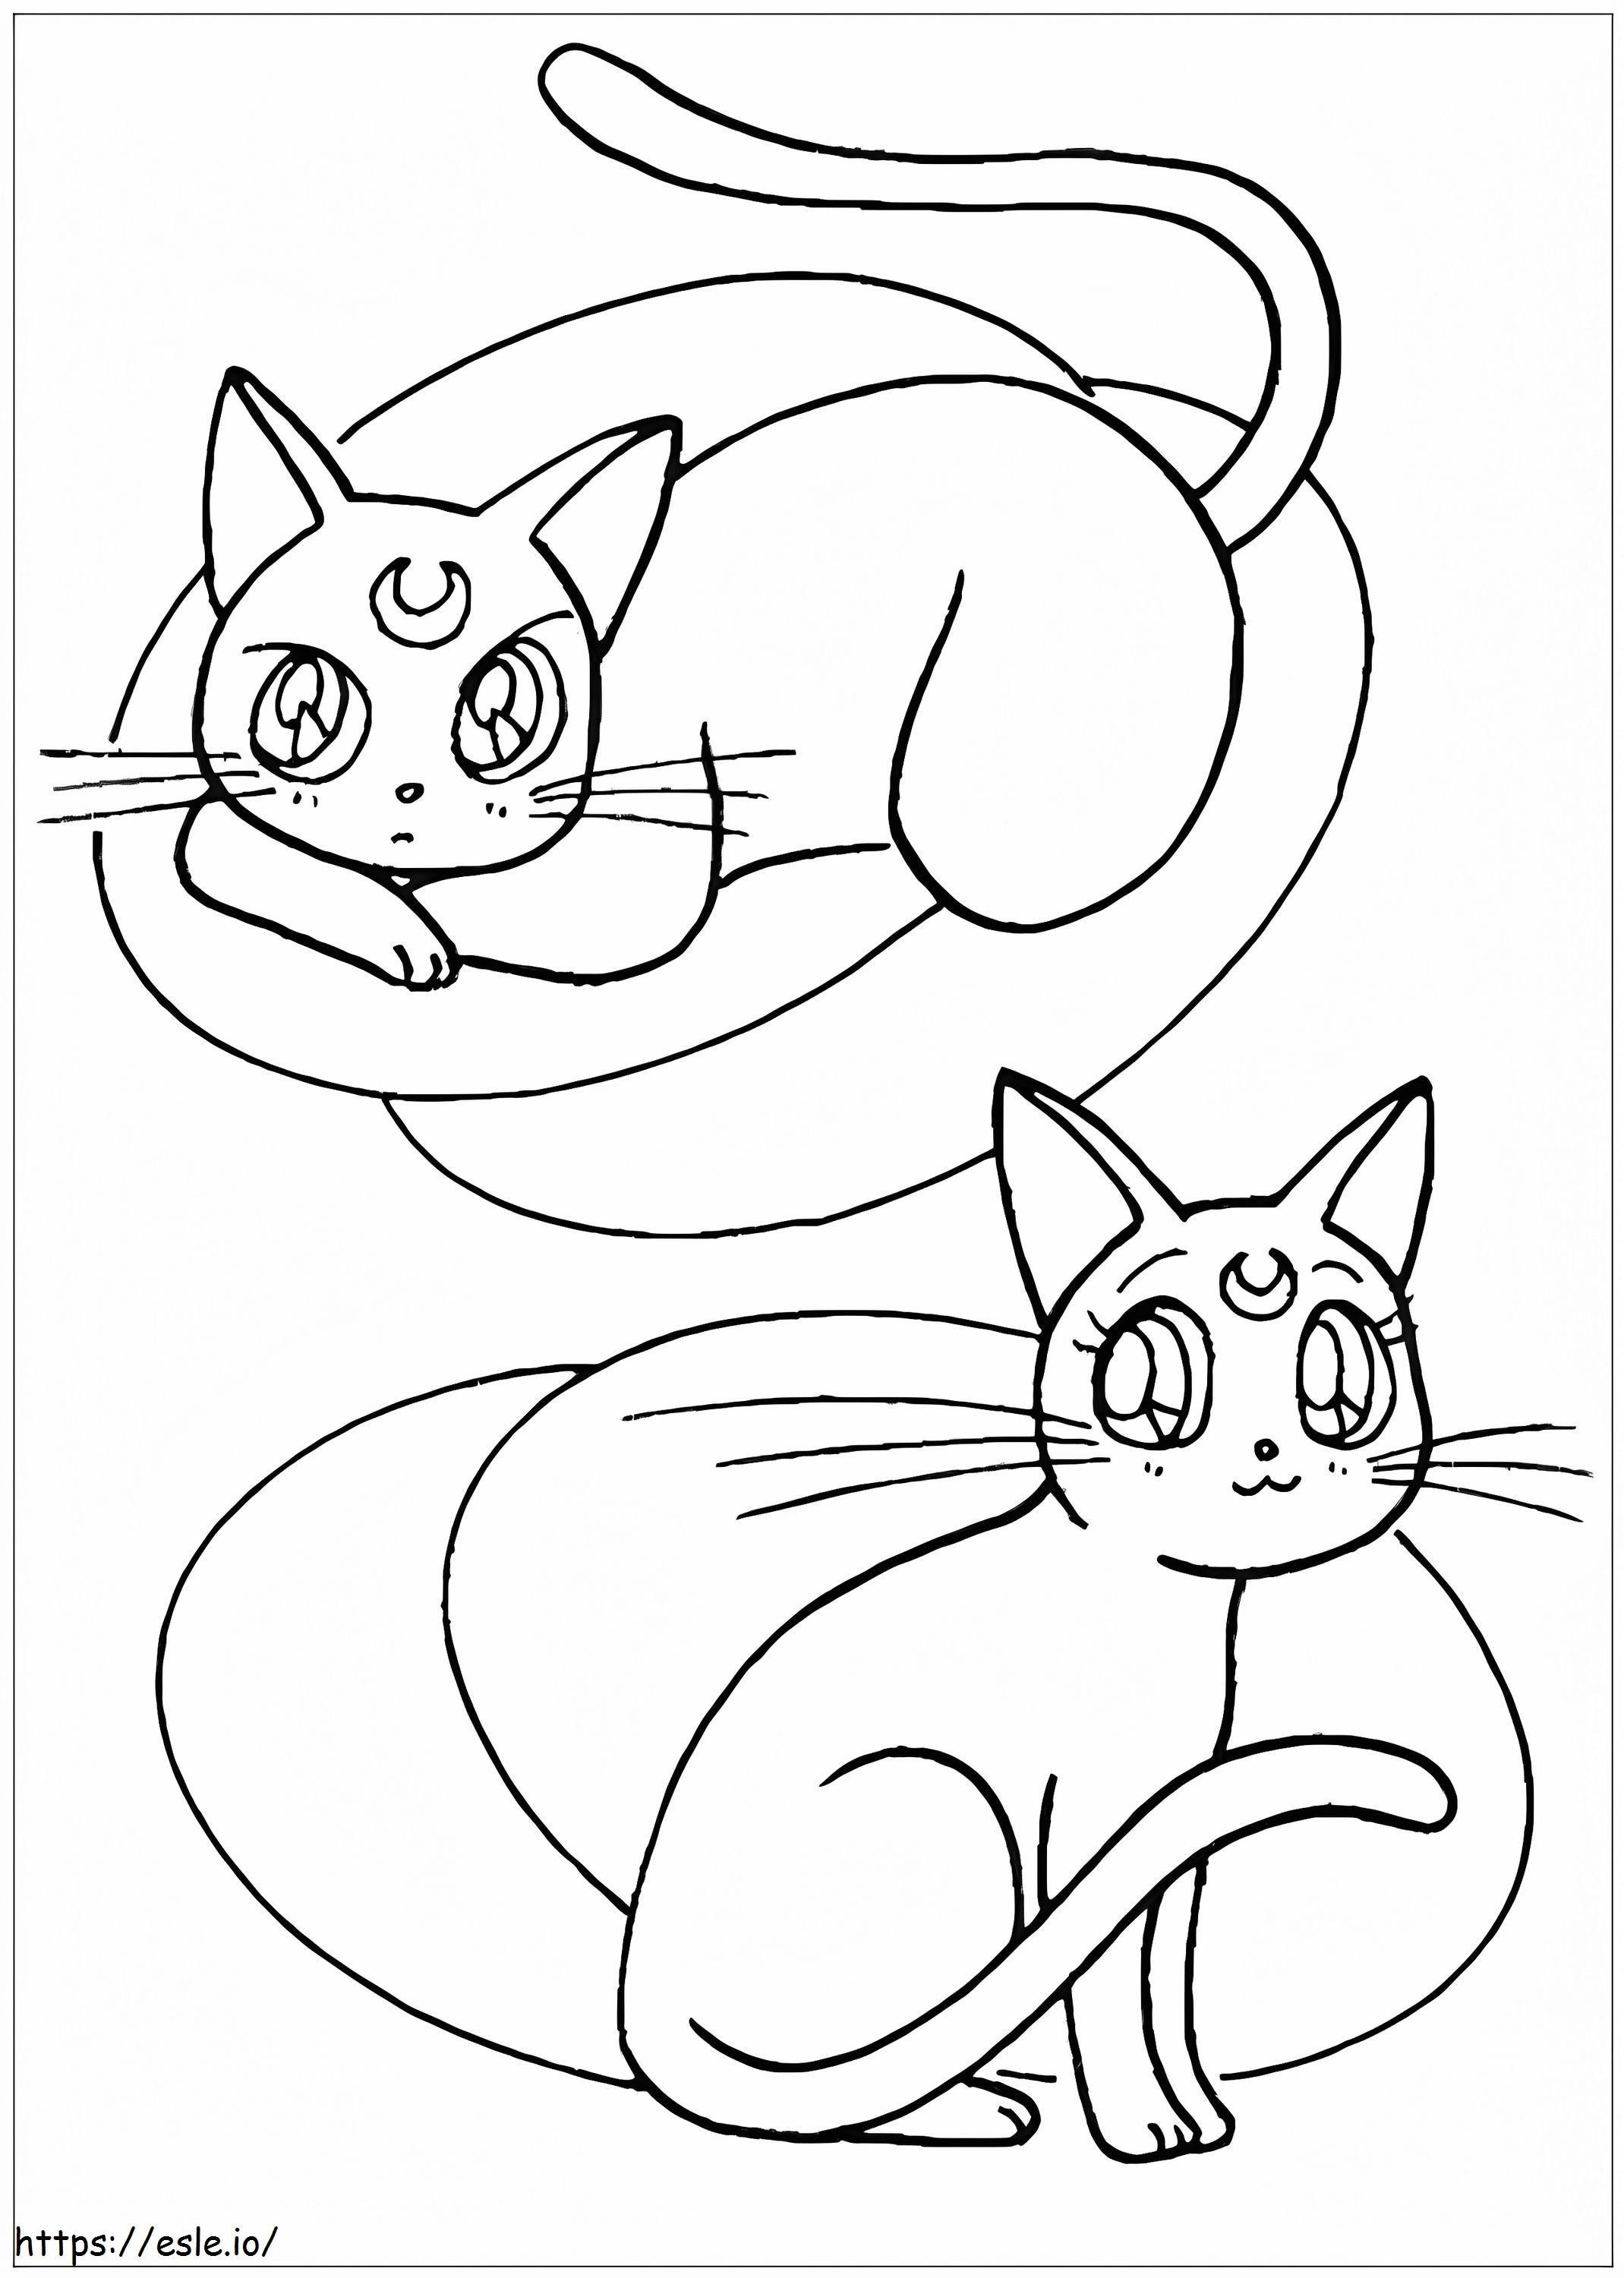 Zwei süße Kriegerkatzen ausmalbilder